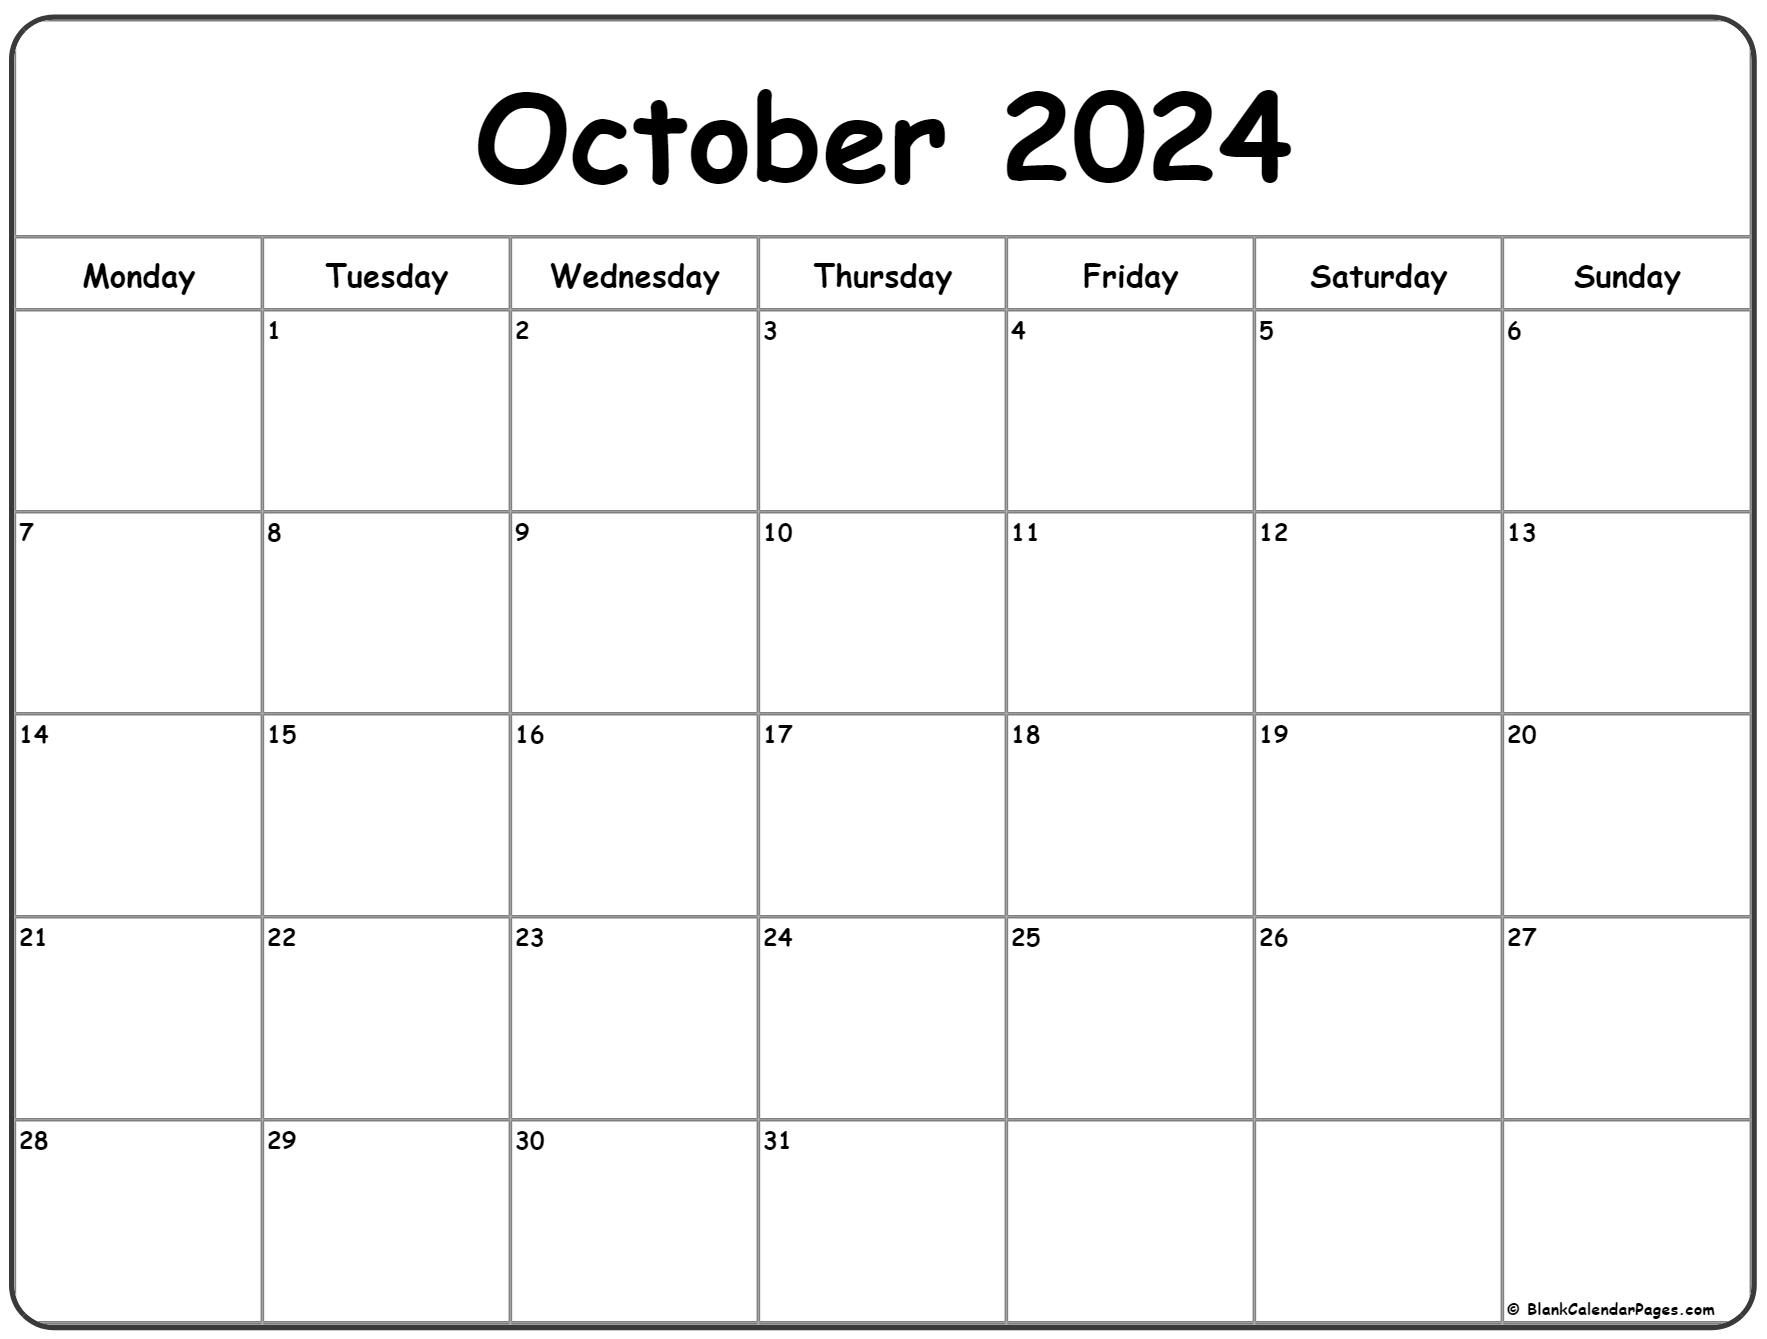 October 2024 Monday Calendar | Monday To Sunday | Printable Calendar 2024 October